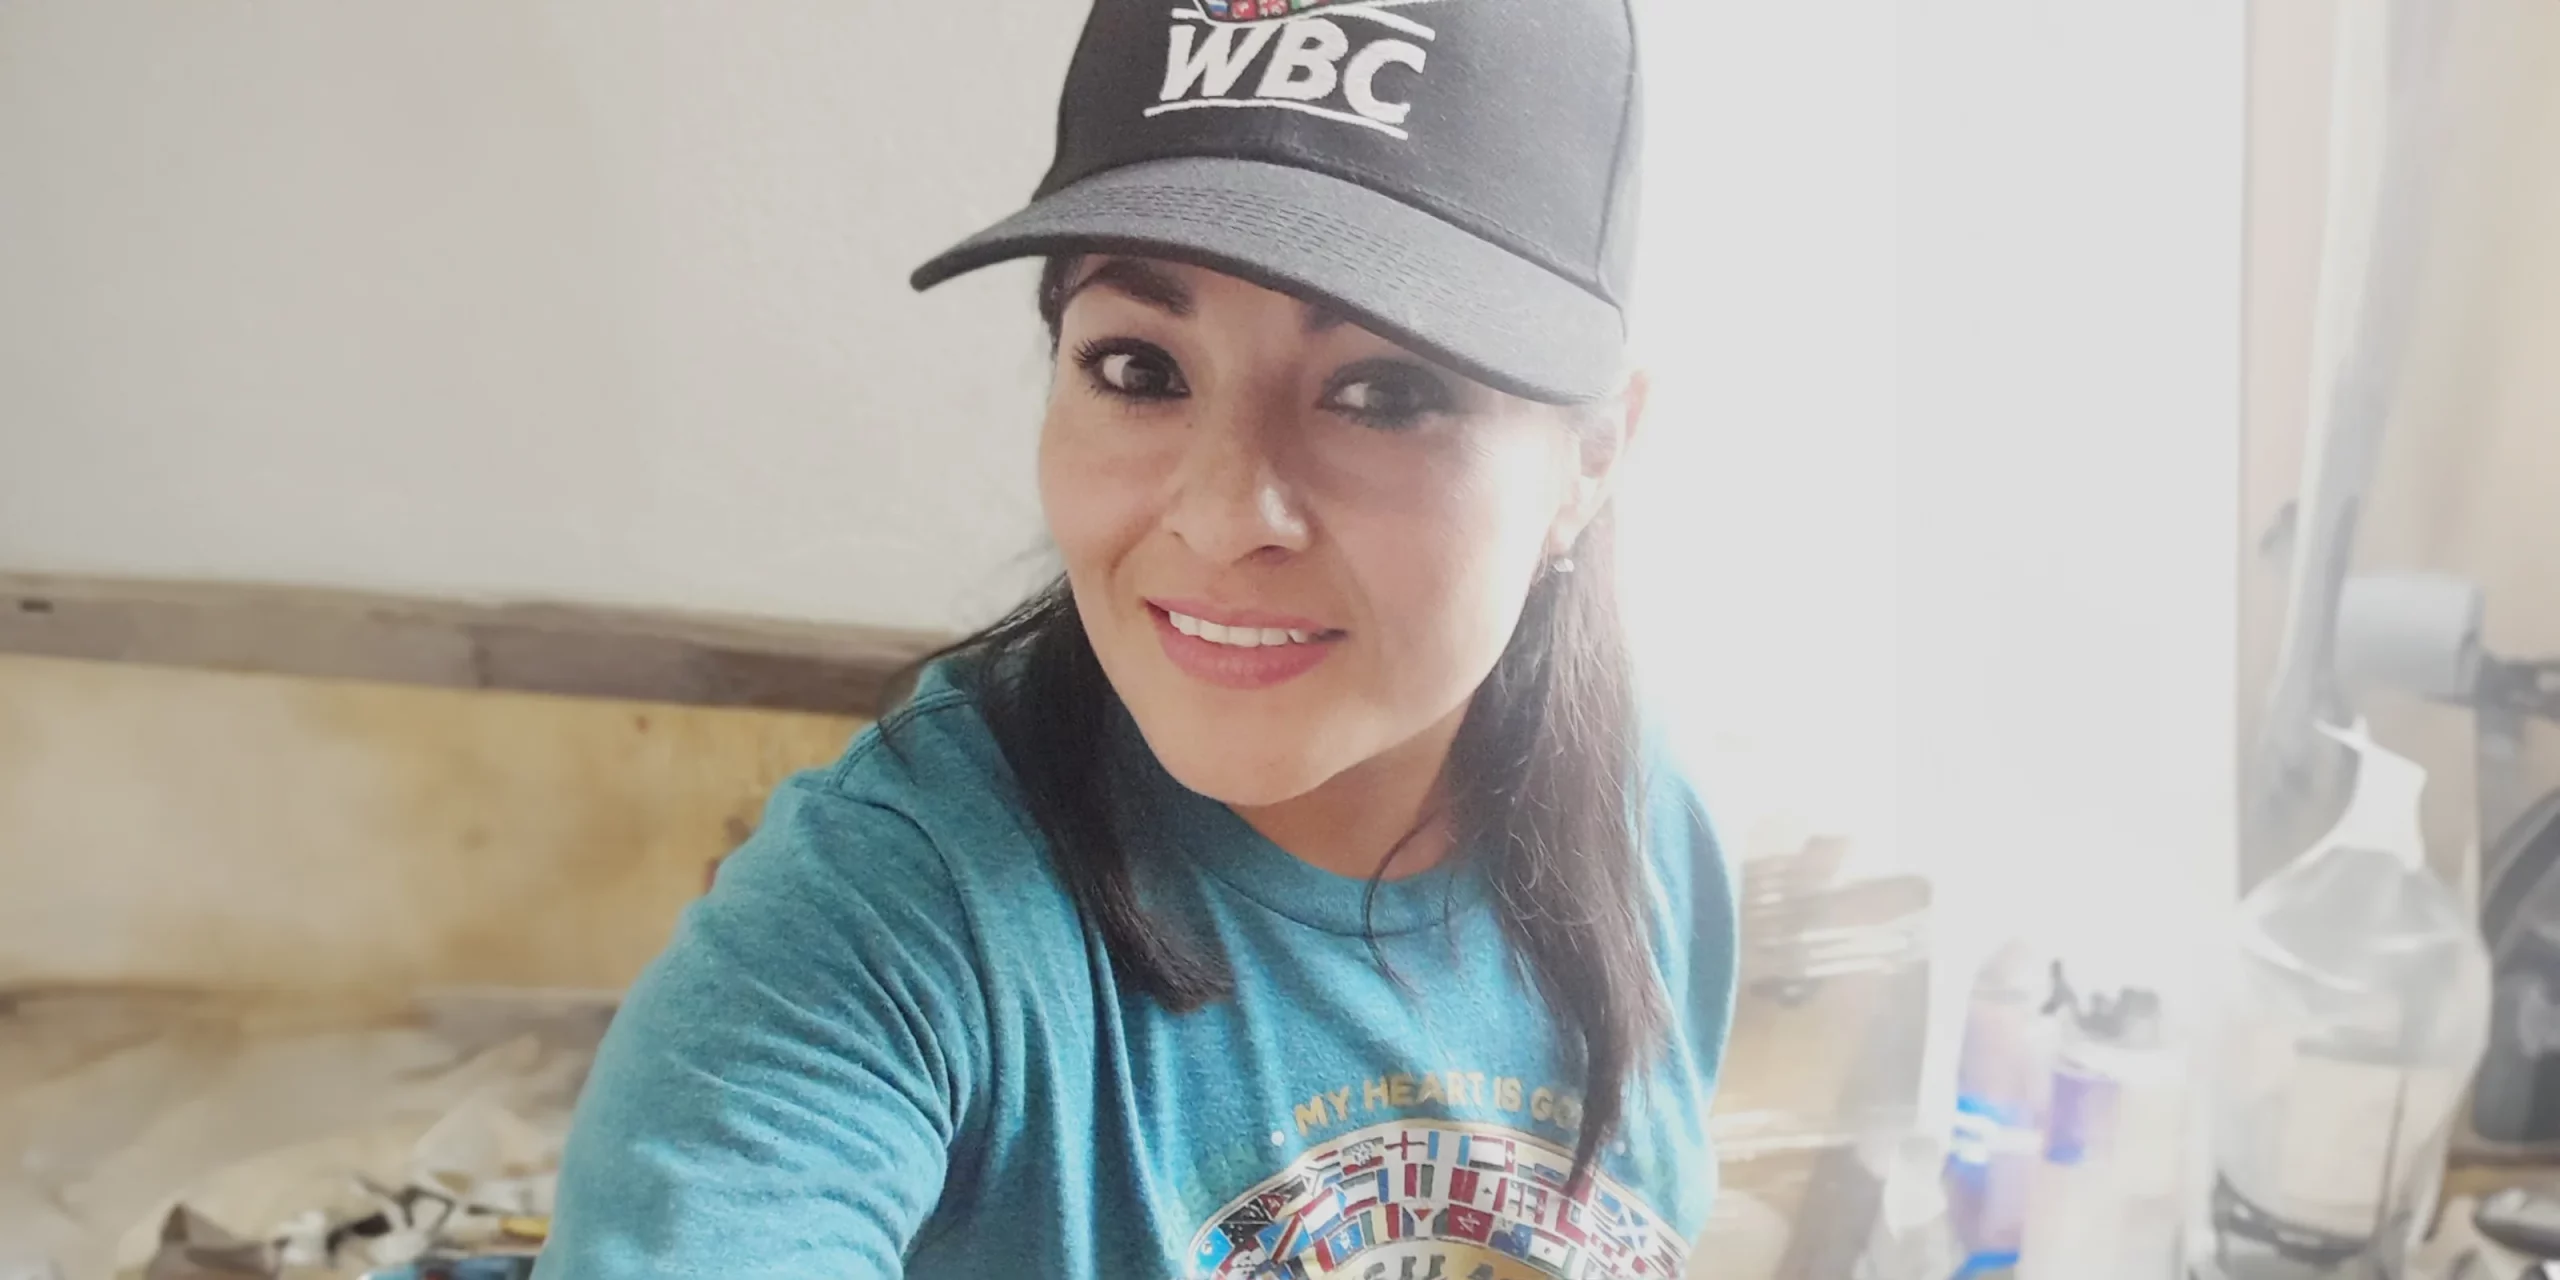 Bringing Hope Through Boxing Fitness: WBC Cares’ Impactful Initiative